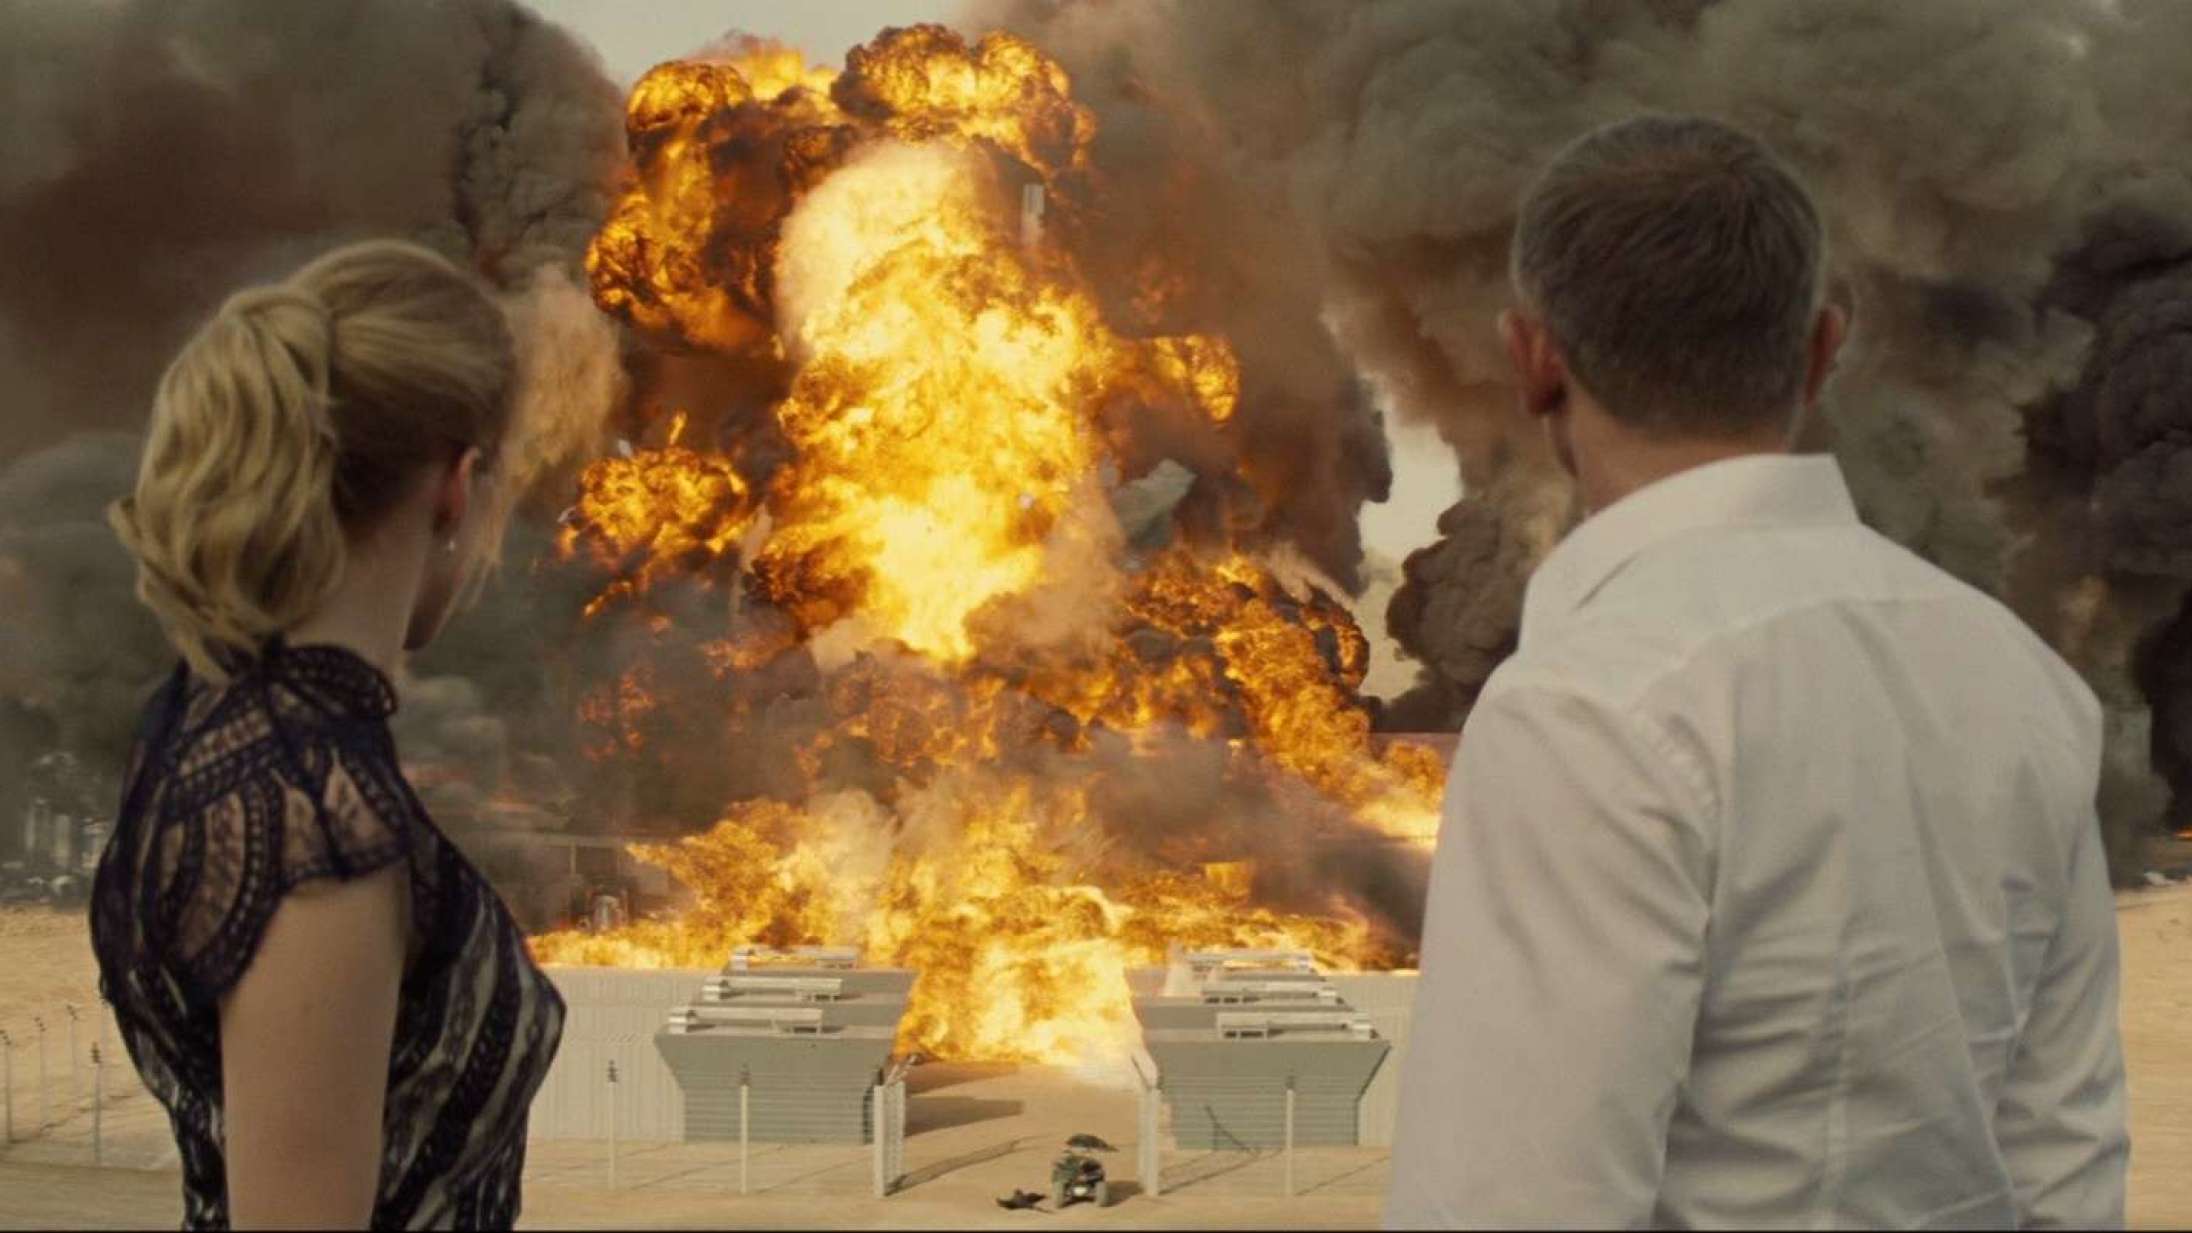 Michael Bay og James Bond-film i besk kamp om verdensrekord for største eksplosion på film